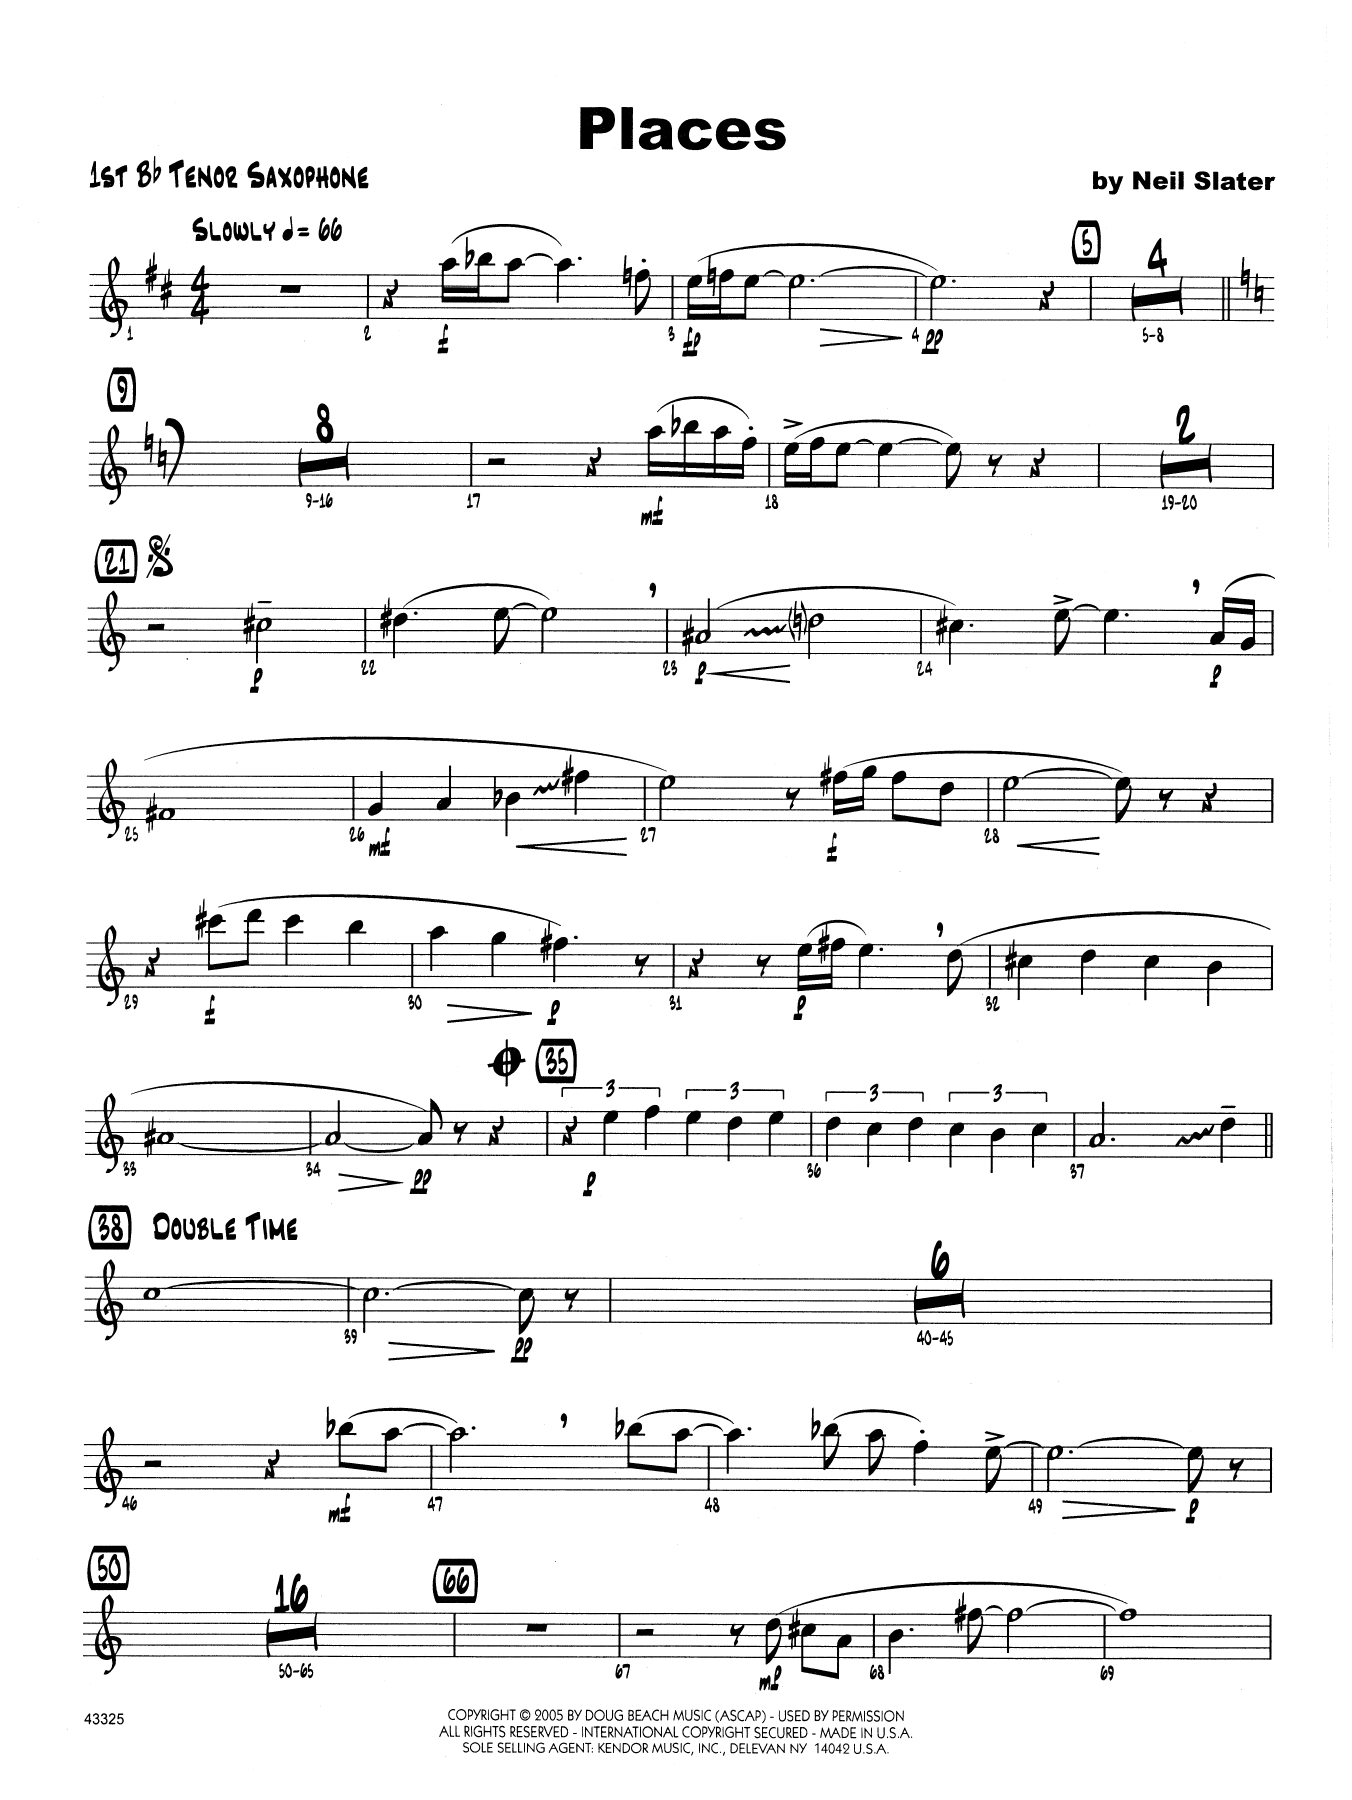 Download Neil Slater Places - 1st Tenor Saxophone Sheet Music